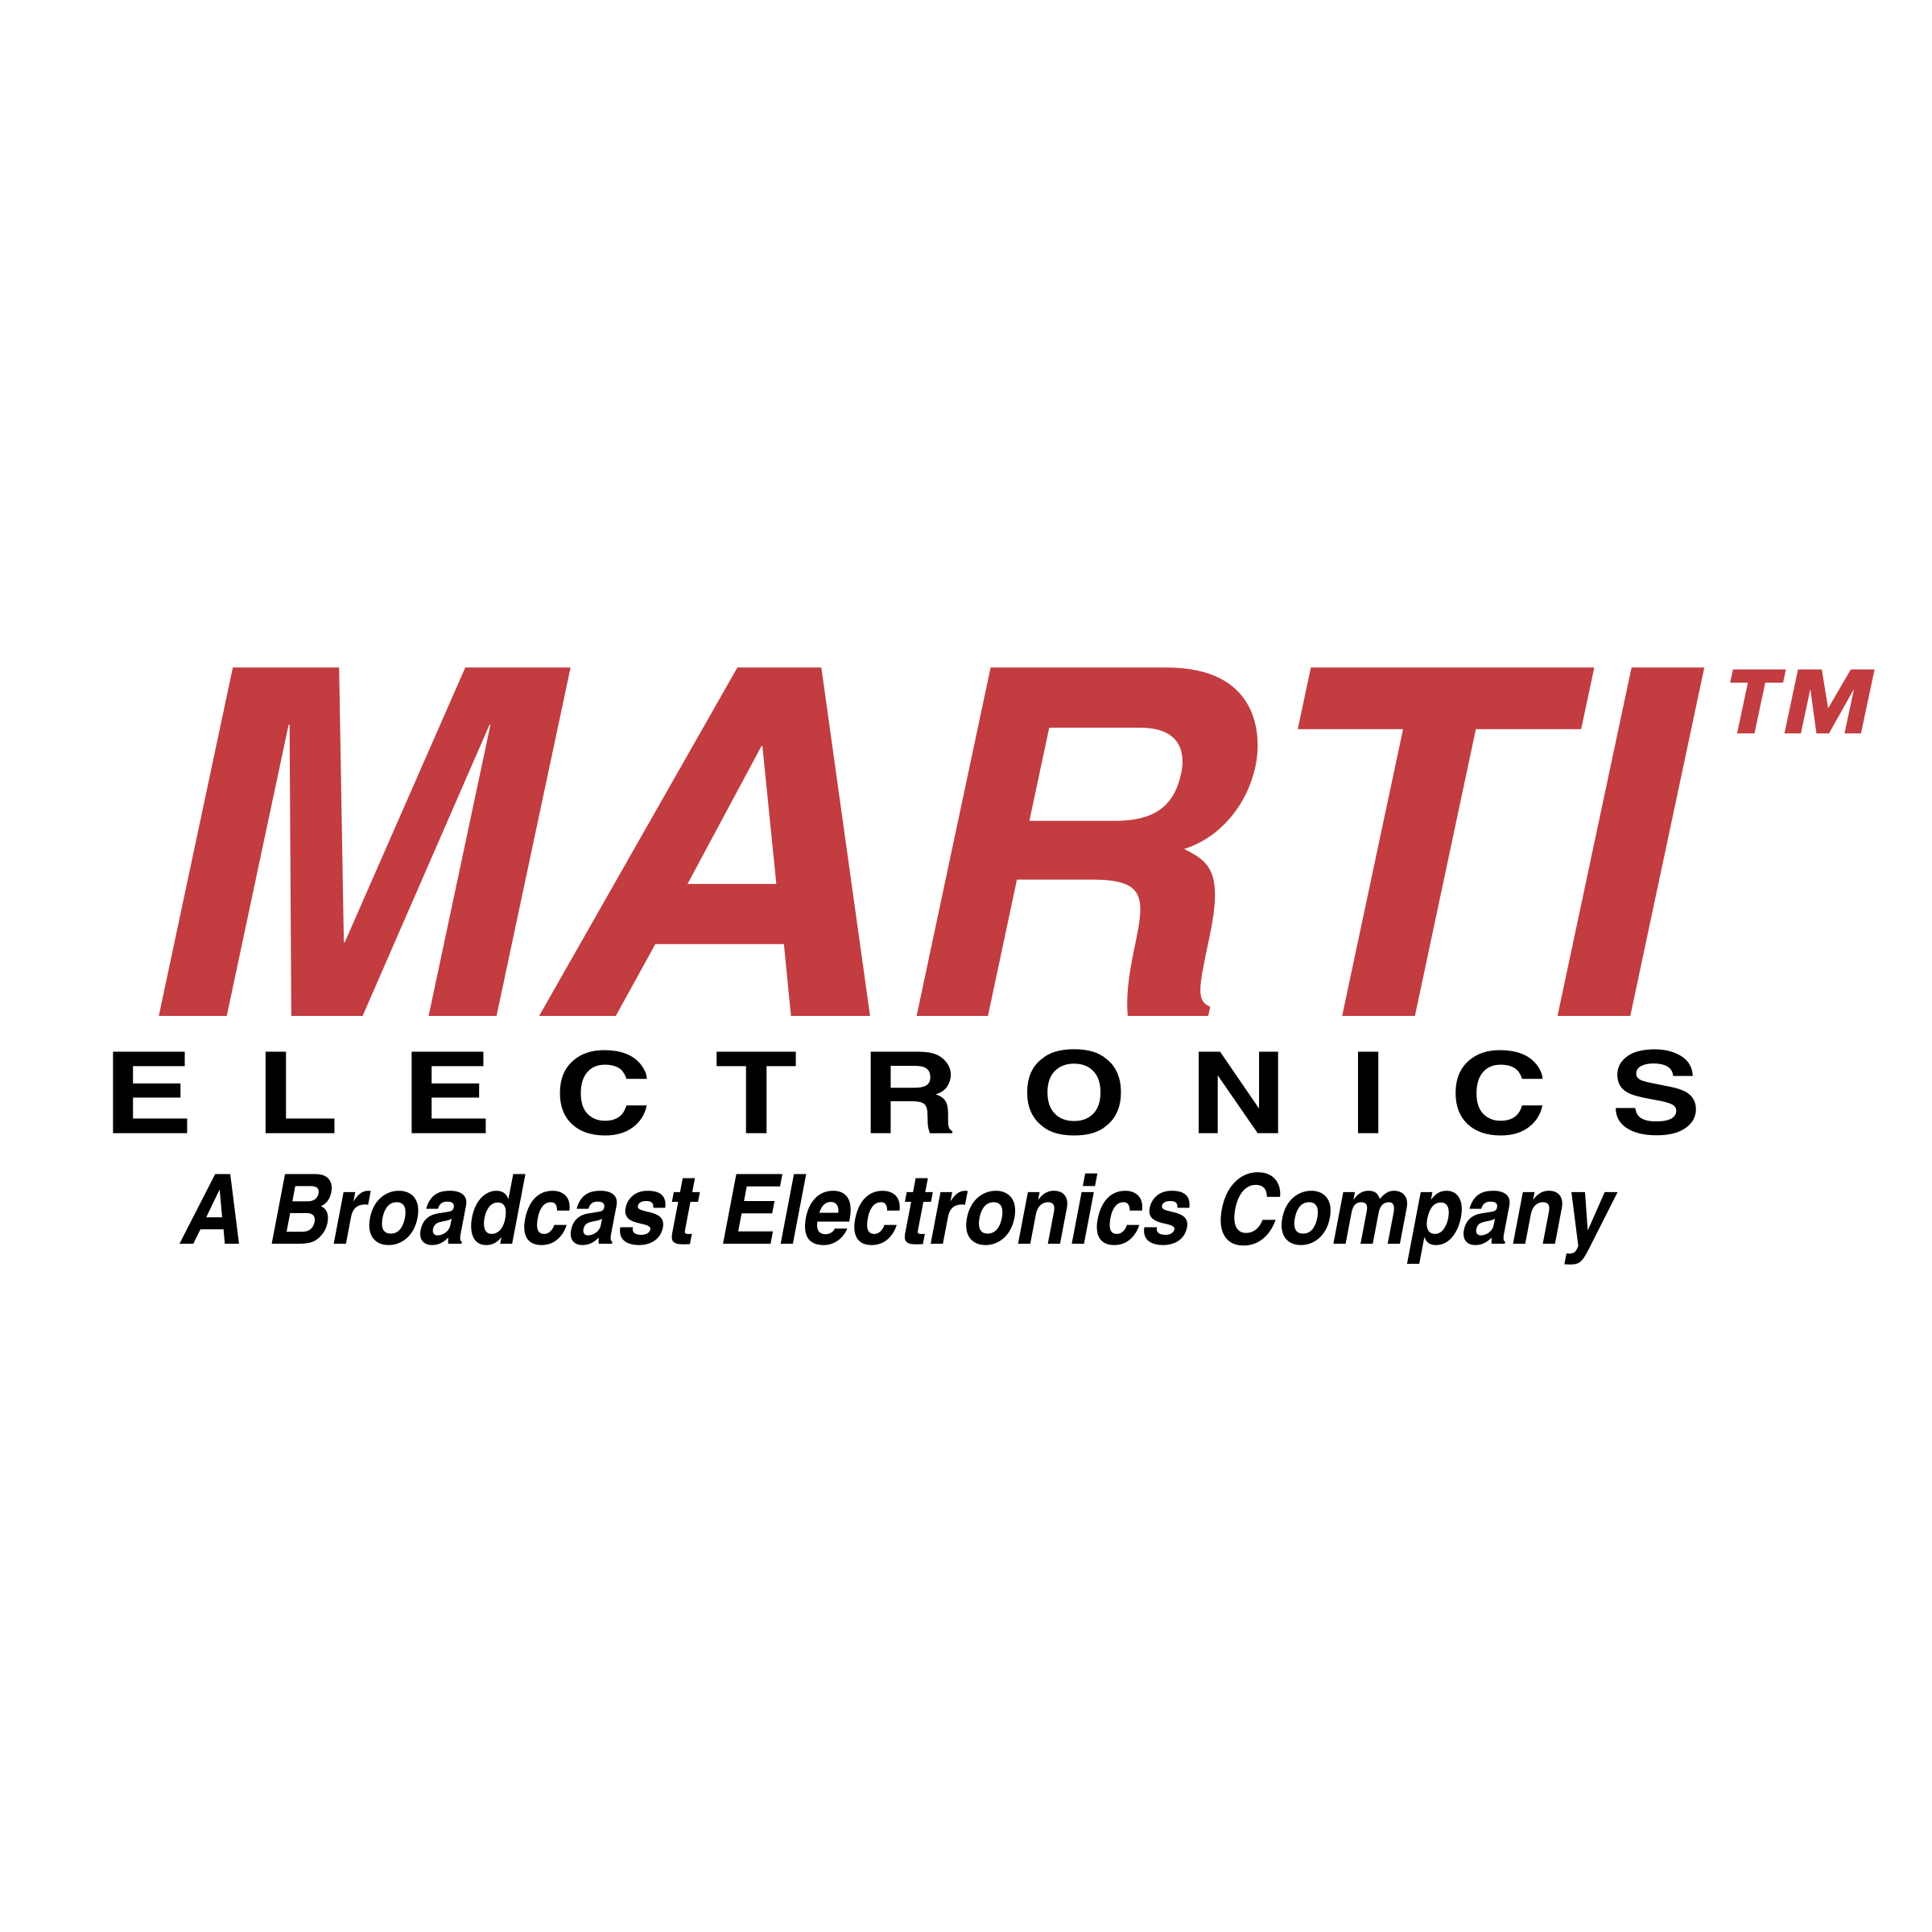 Marti Logo - Marti Electronics Logo PNG Transparent & SVG Vector - Freebie Supply